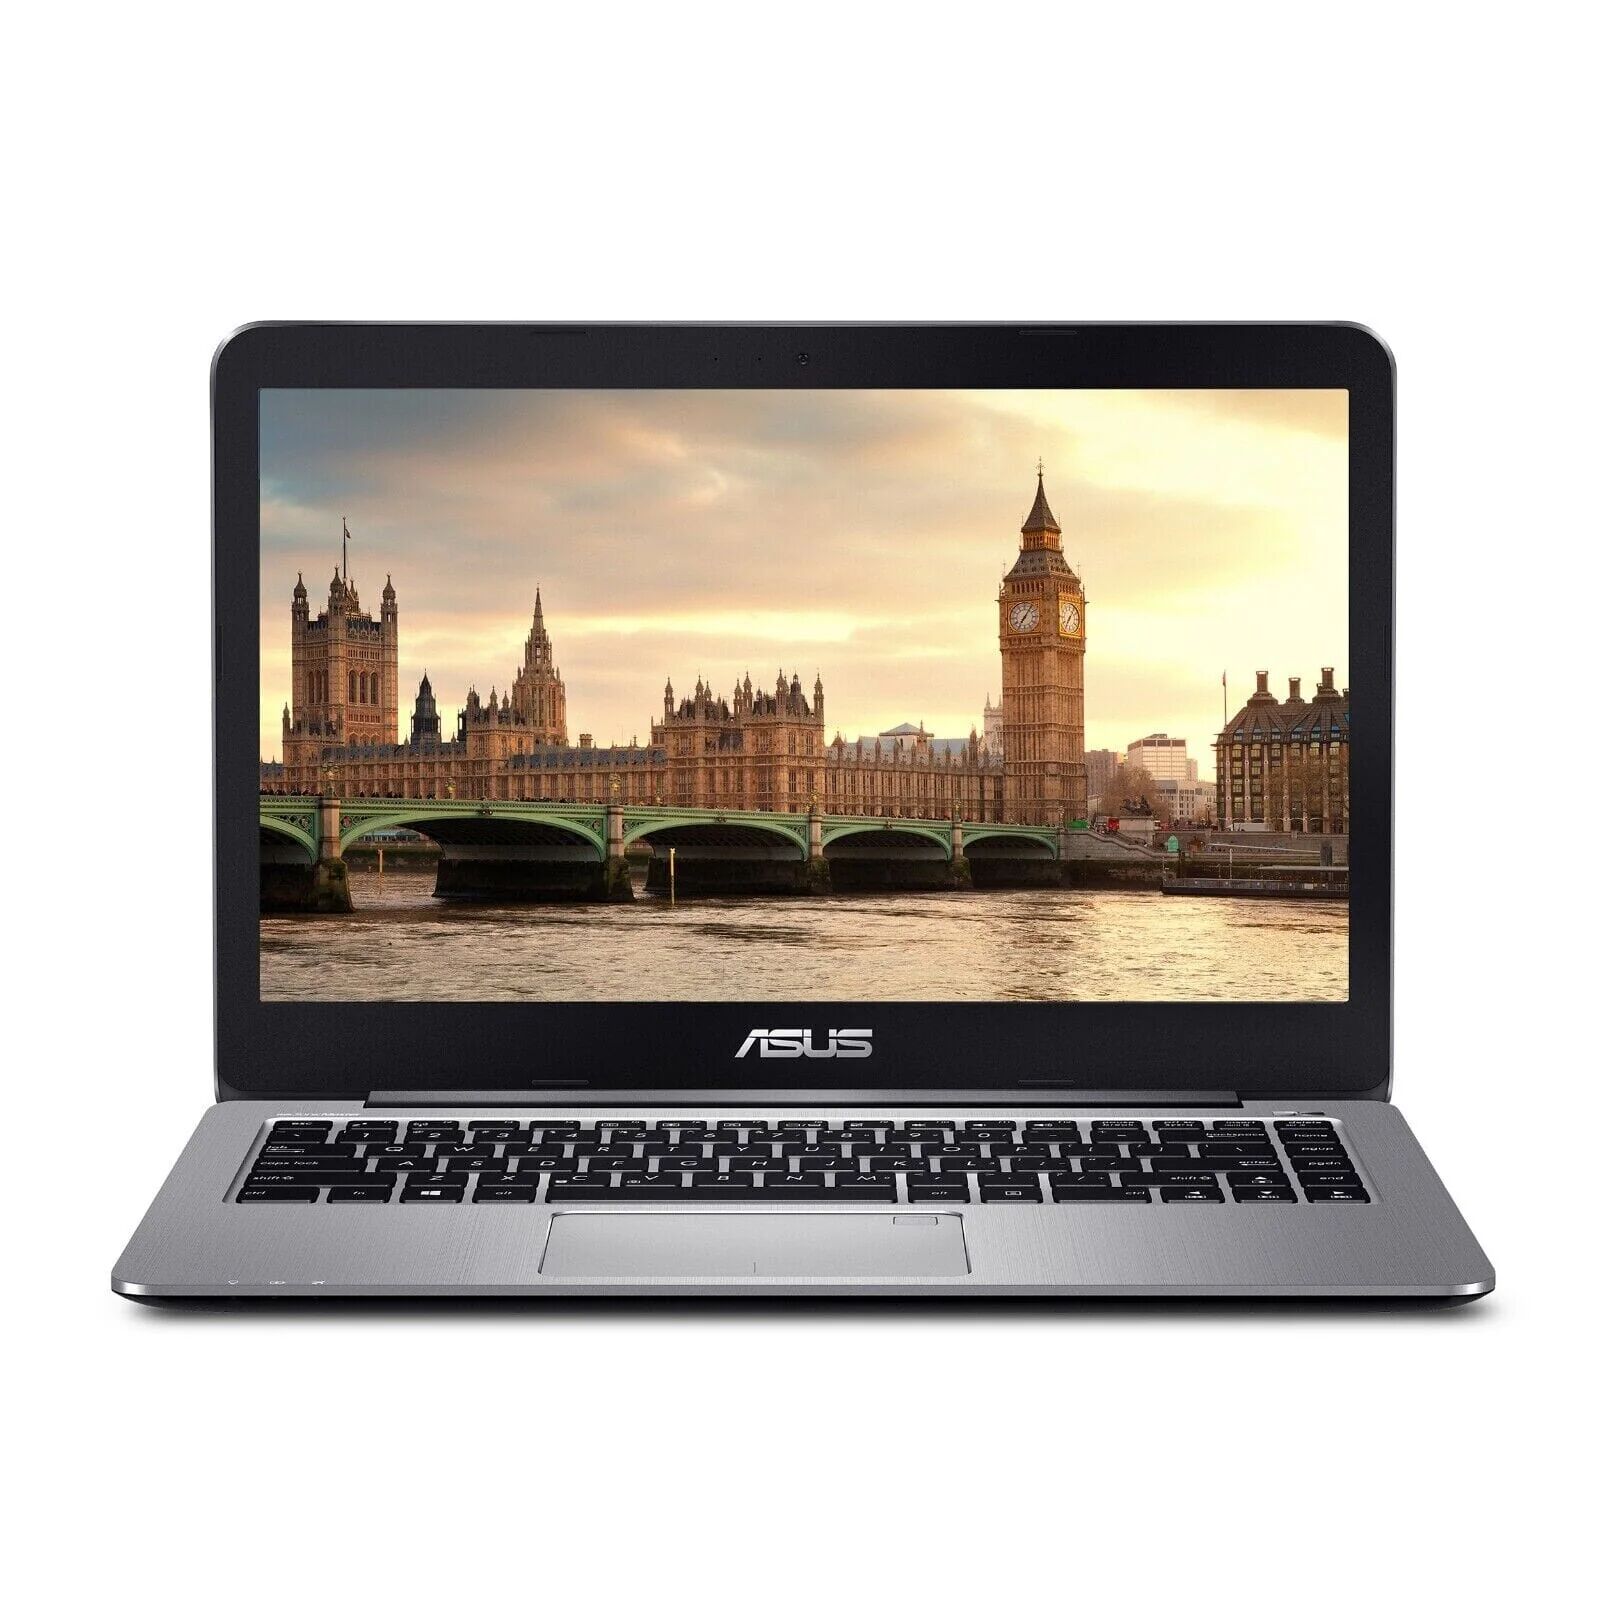 DailySale Asus VivoBook E403NA 14" Laptop Windows 10 Pentium N 4GB Ram 128GB SSD HDMI (Refurbished)